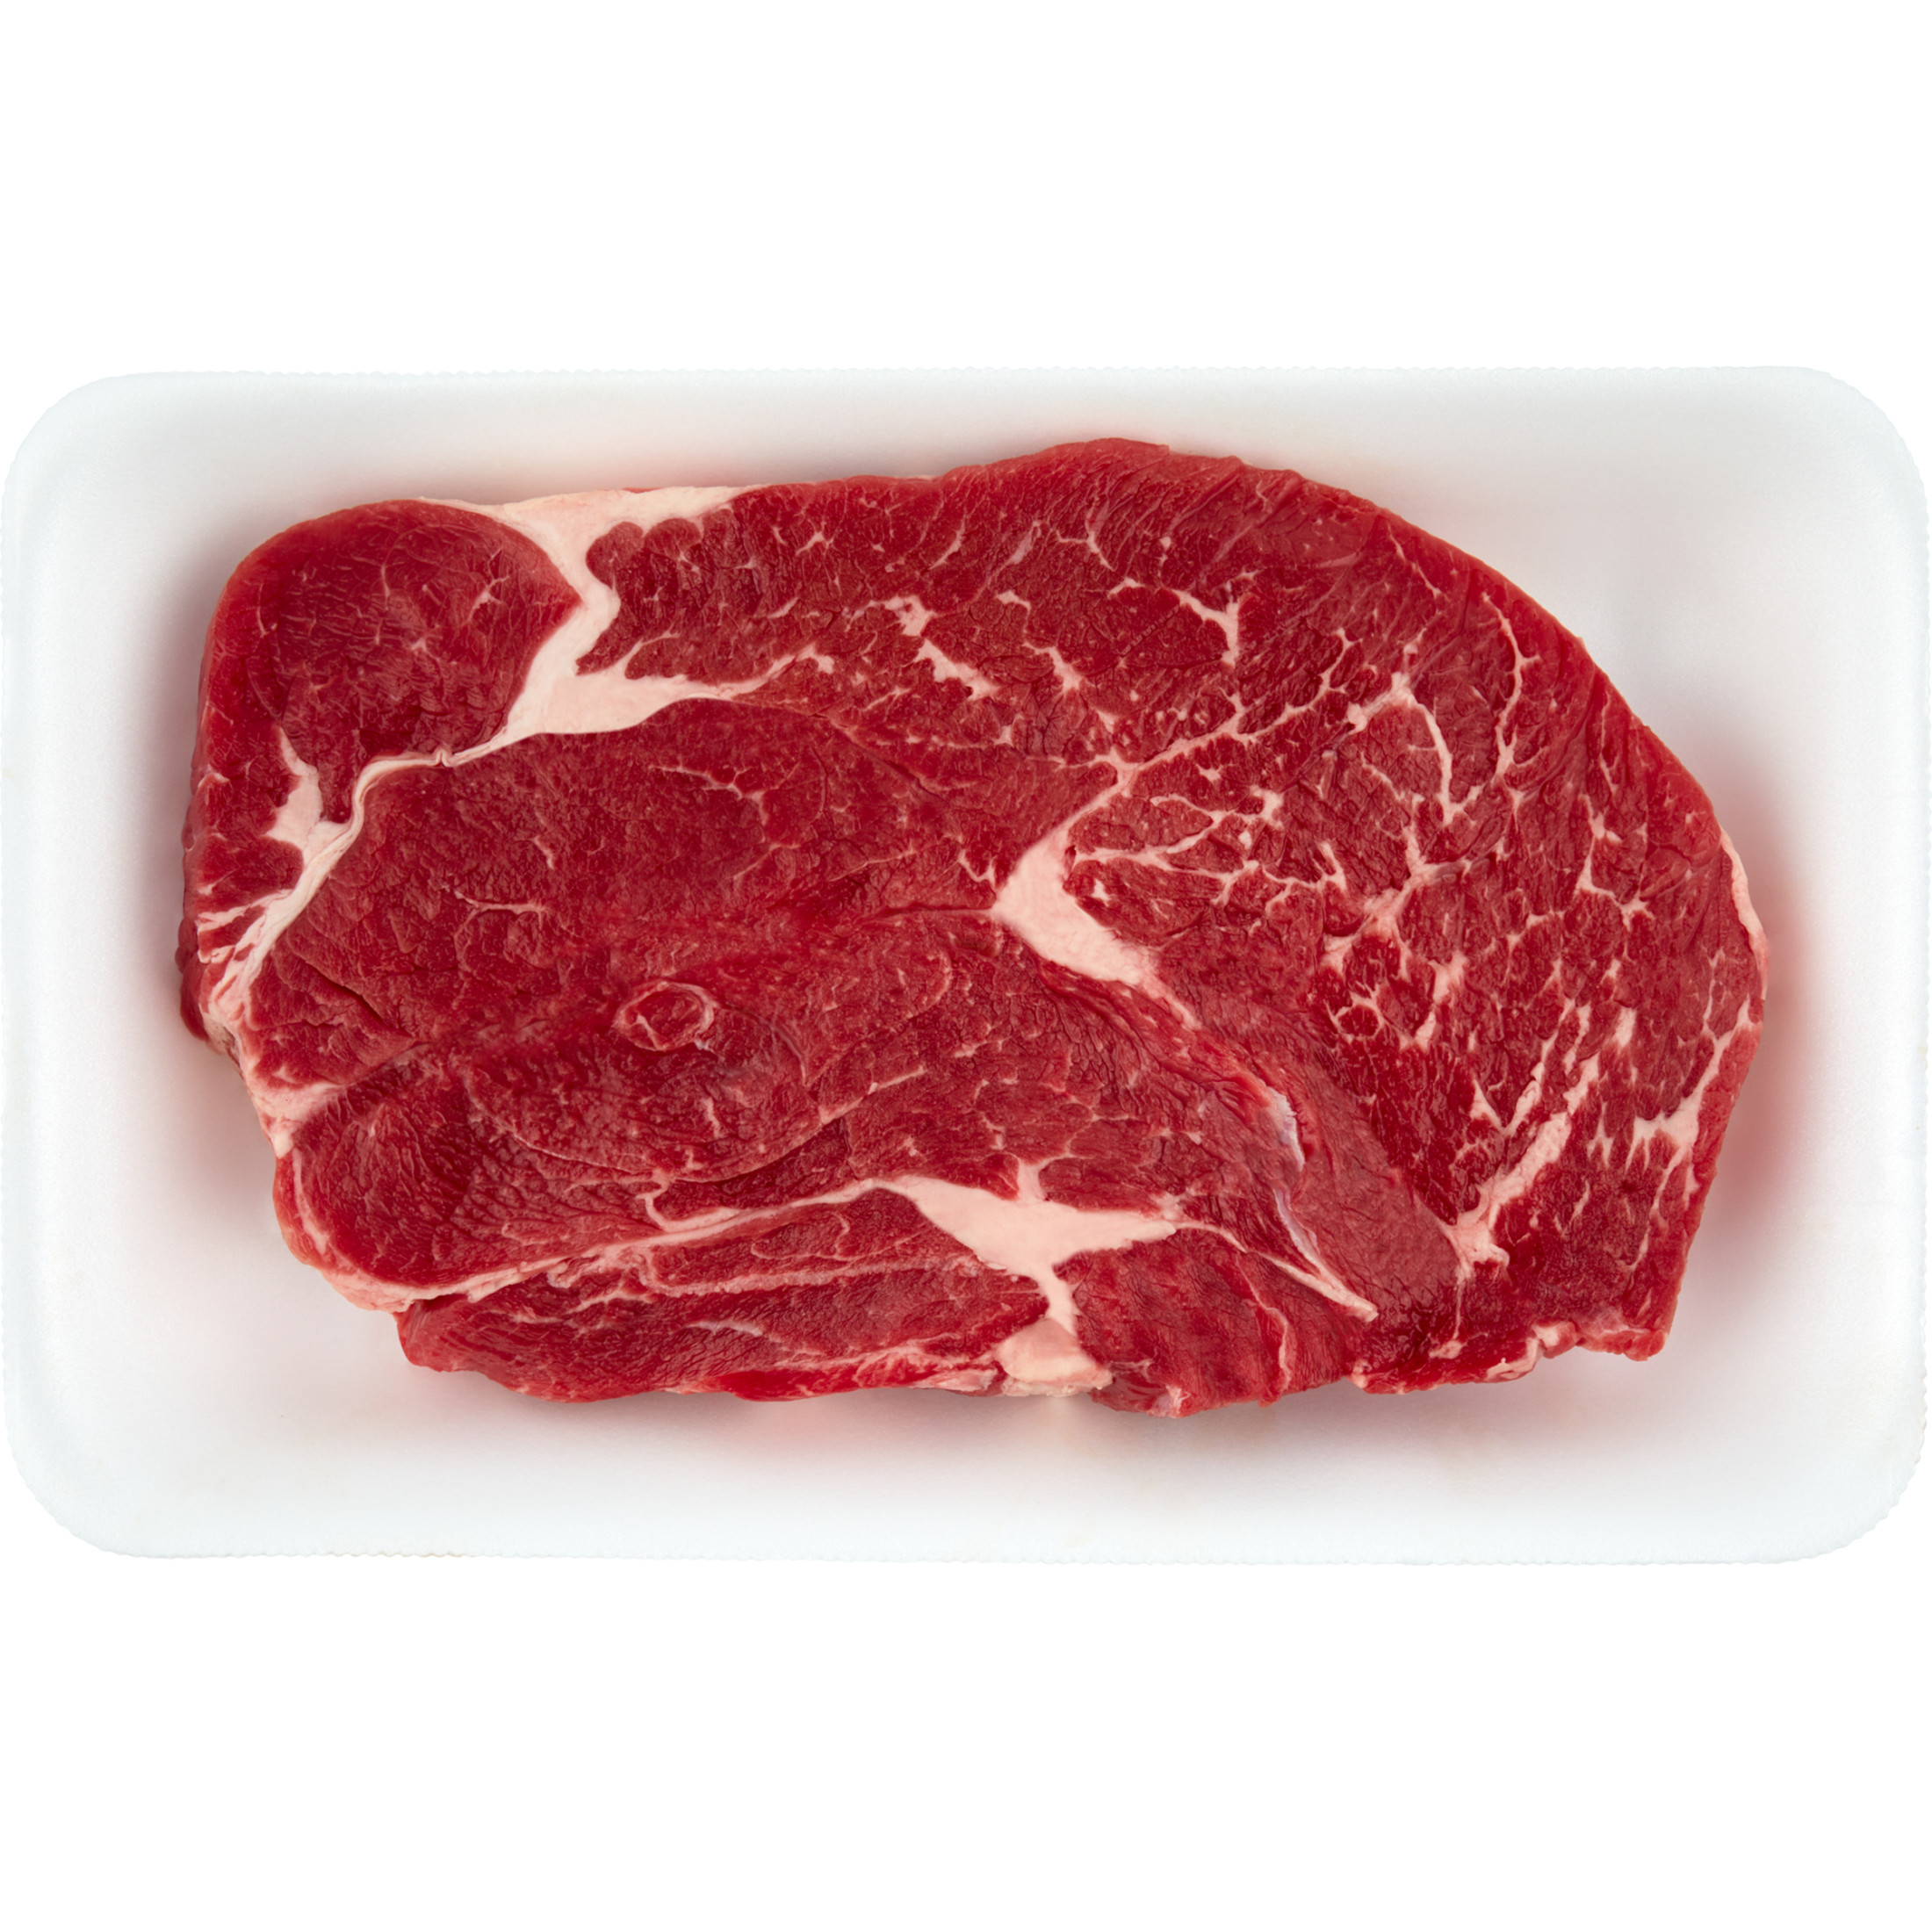 Beef Chuck Roast, 2.0 - 2.65 lb Tray - image 1 of 6